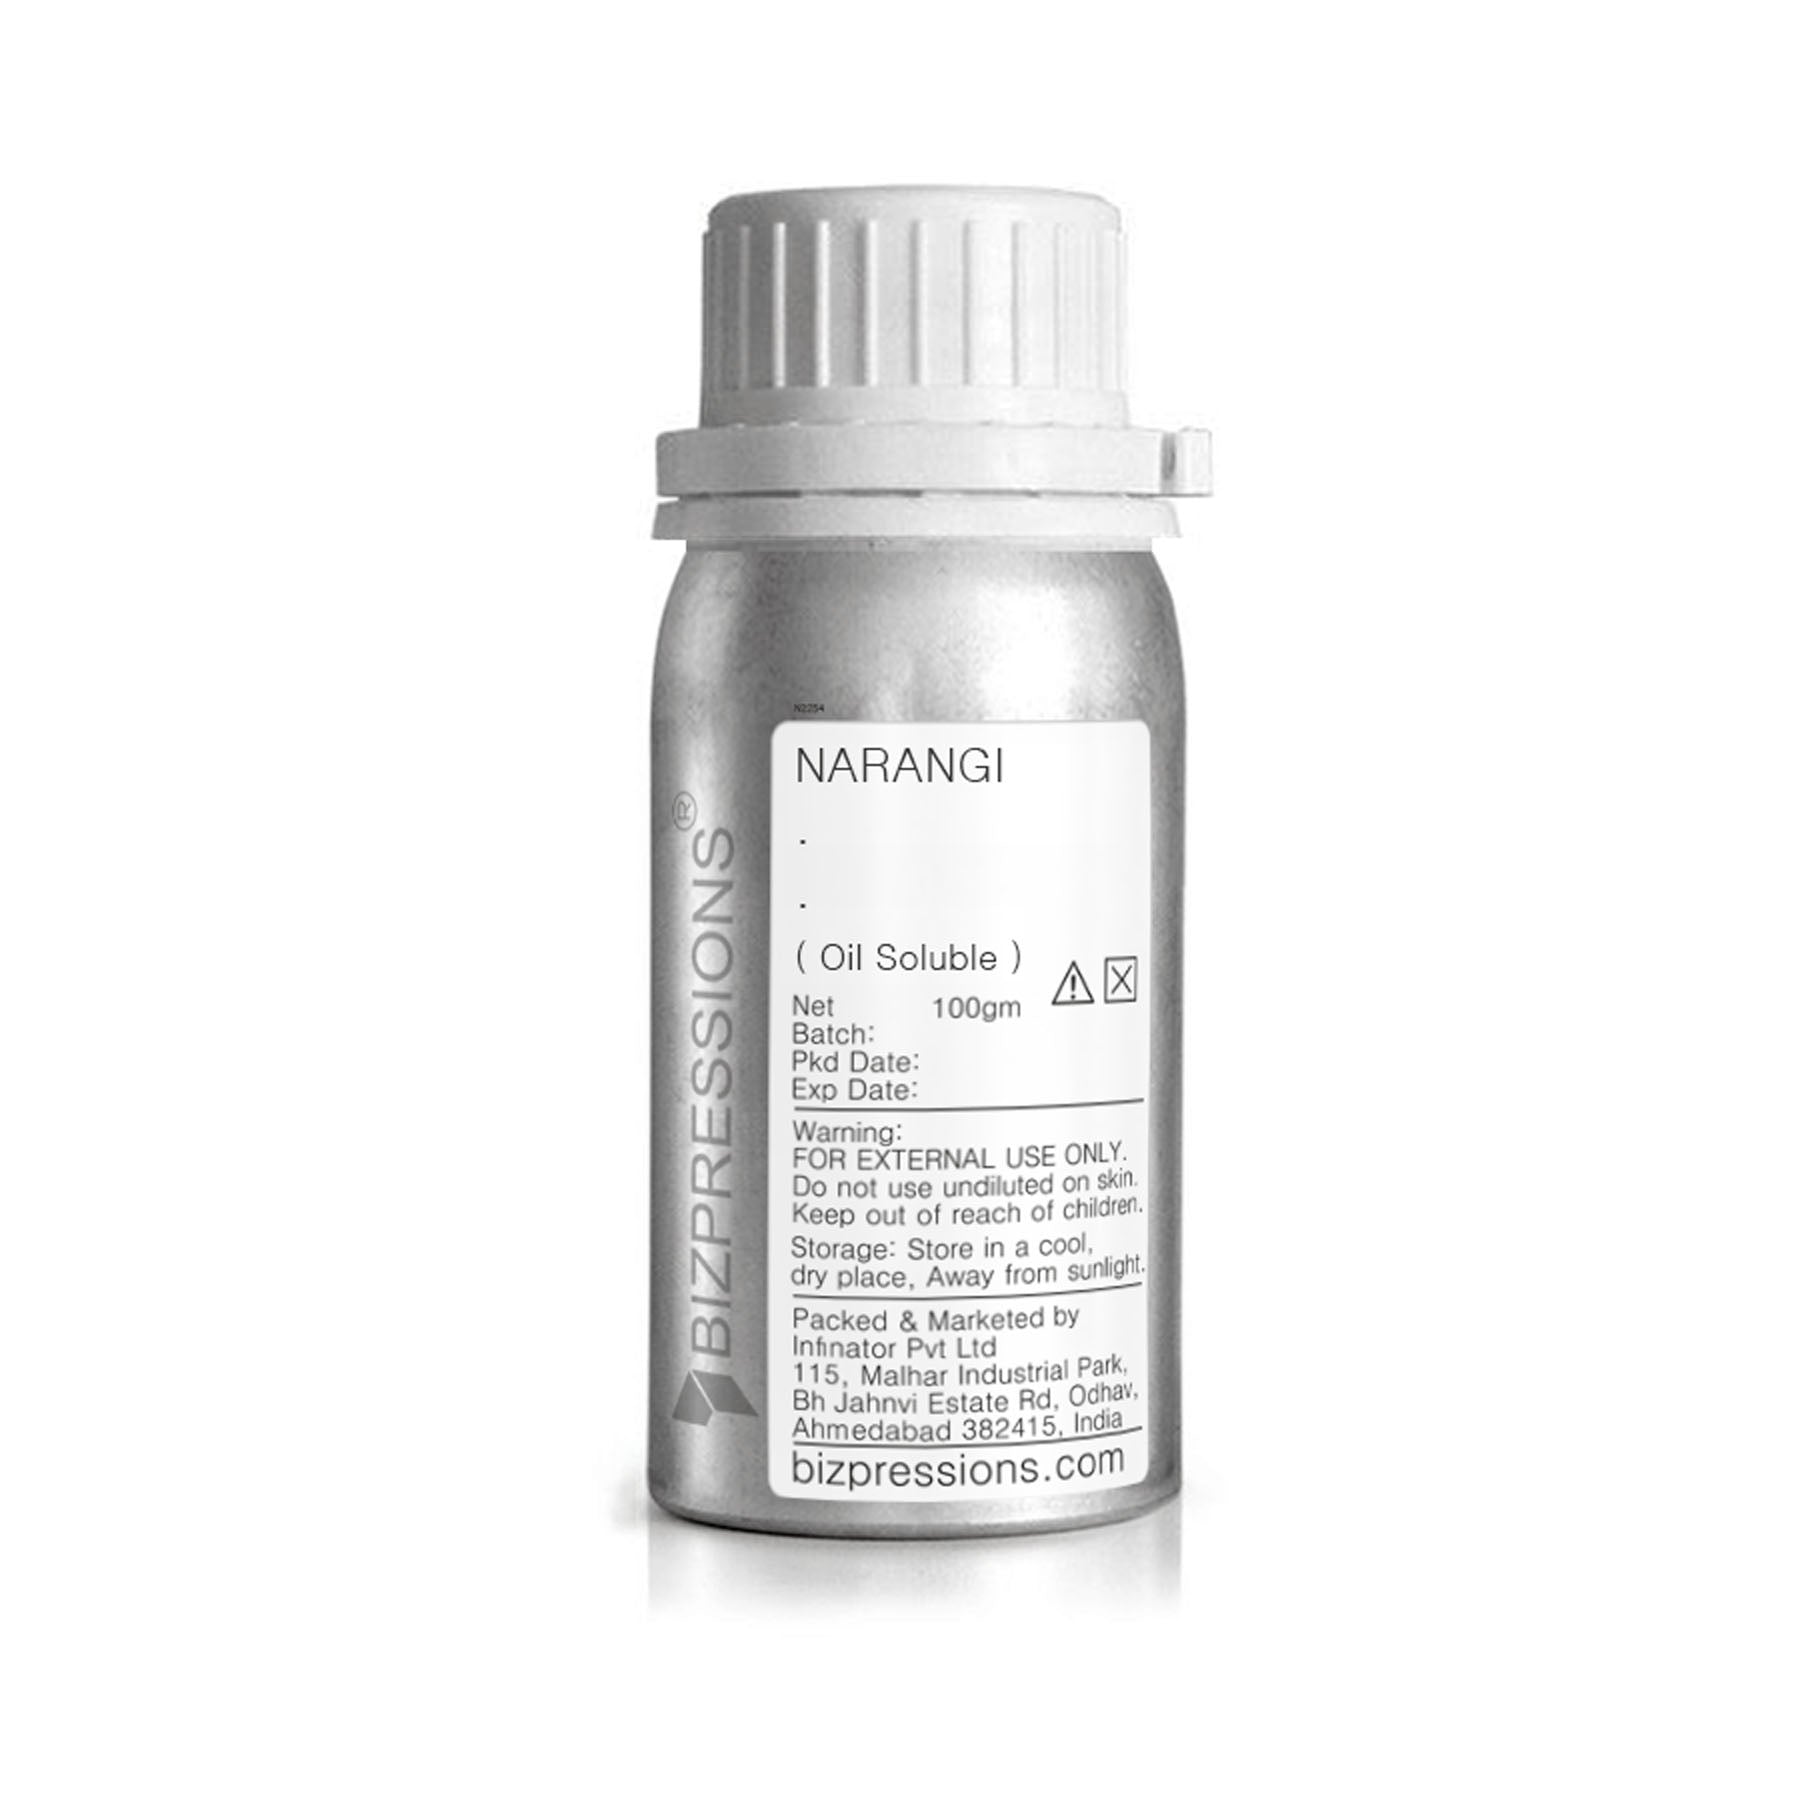 NARANGI - Fragrance ( Oil Soluble ) - 100 gm